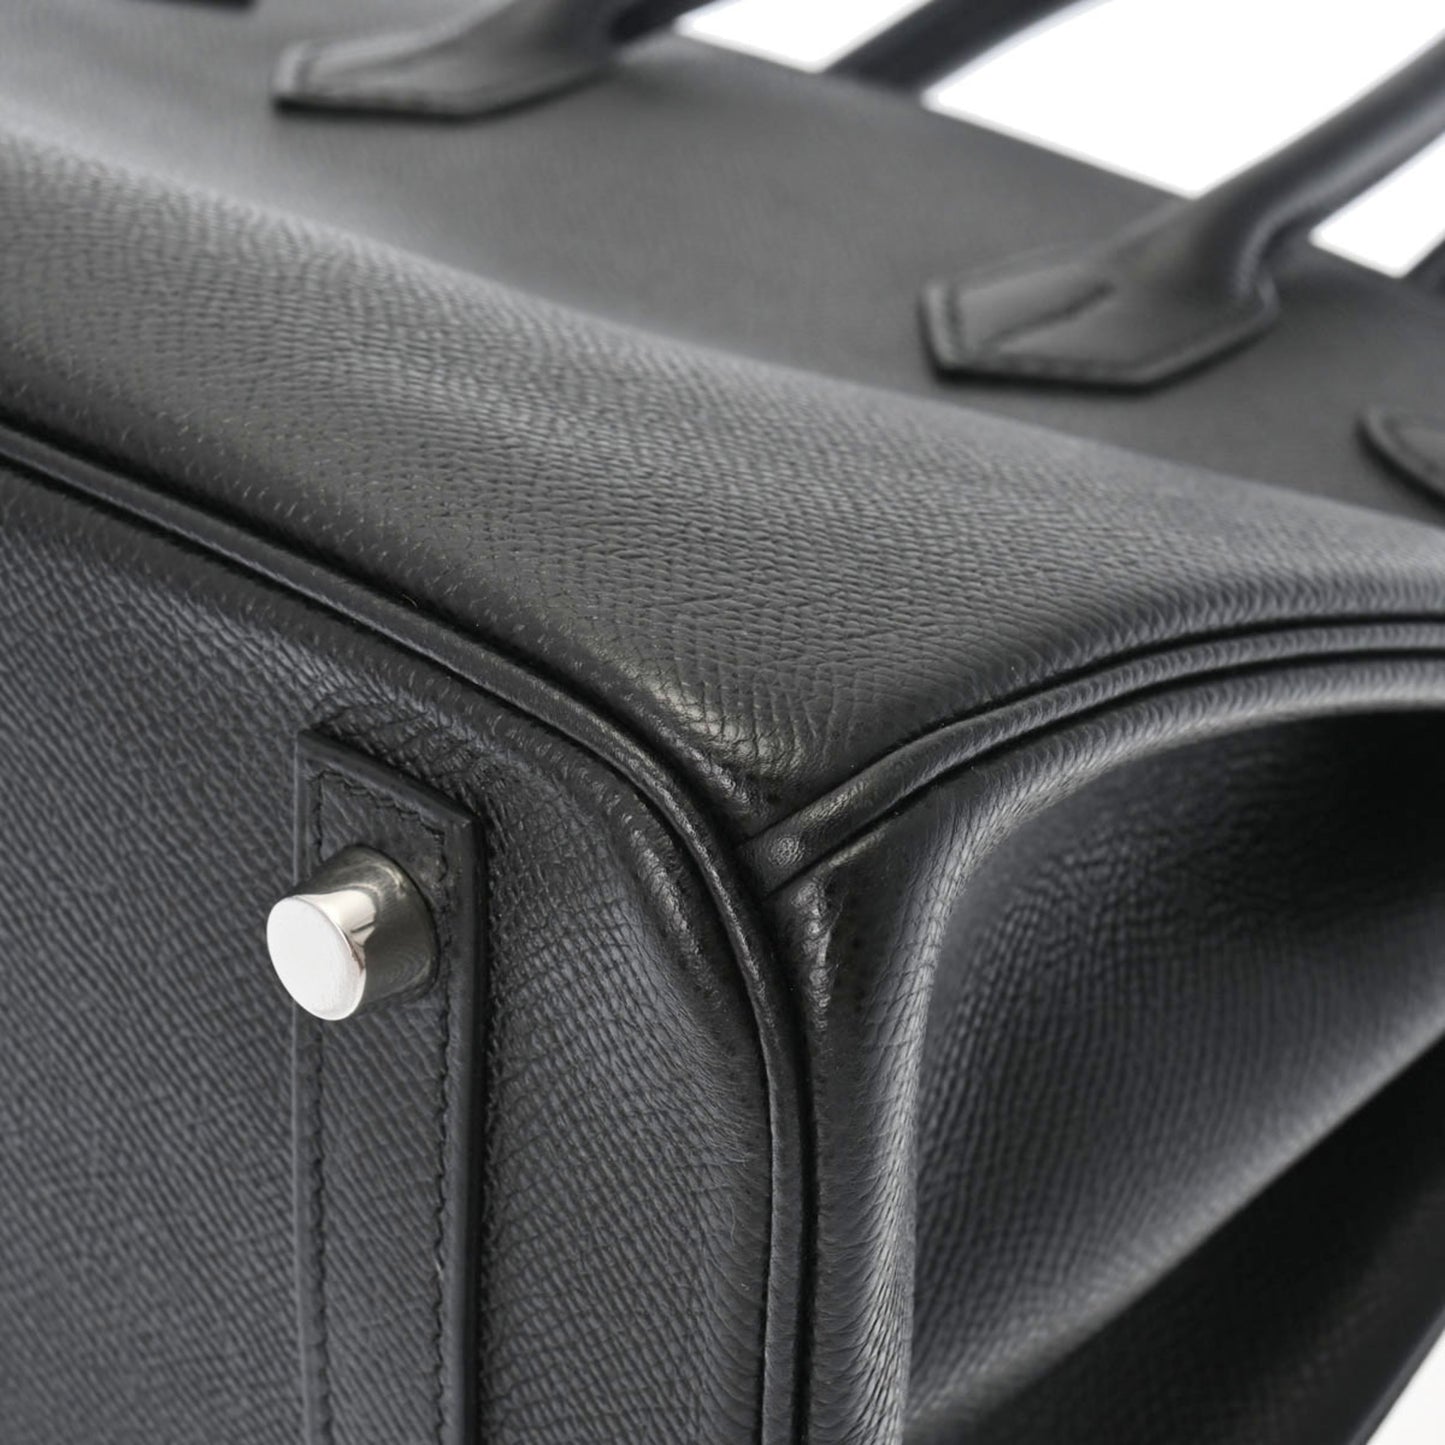 Hermes Women's Luxurious Leather Birkin Handbag with Gold-Tone Hardware in Black